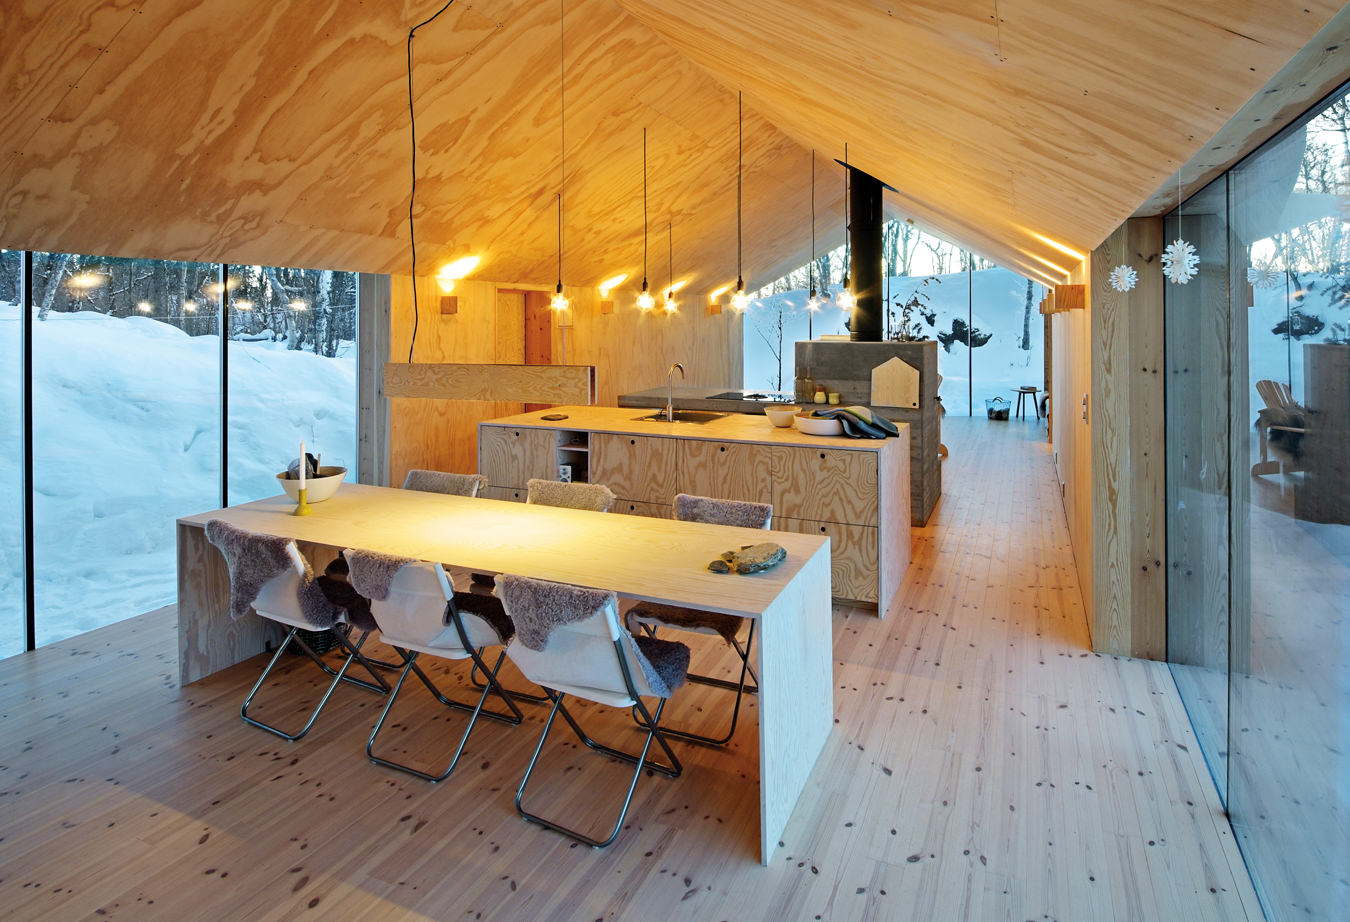 NUVO Winter 2015: Reiulf Ramstad's Architecture